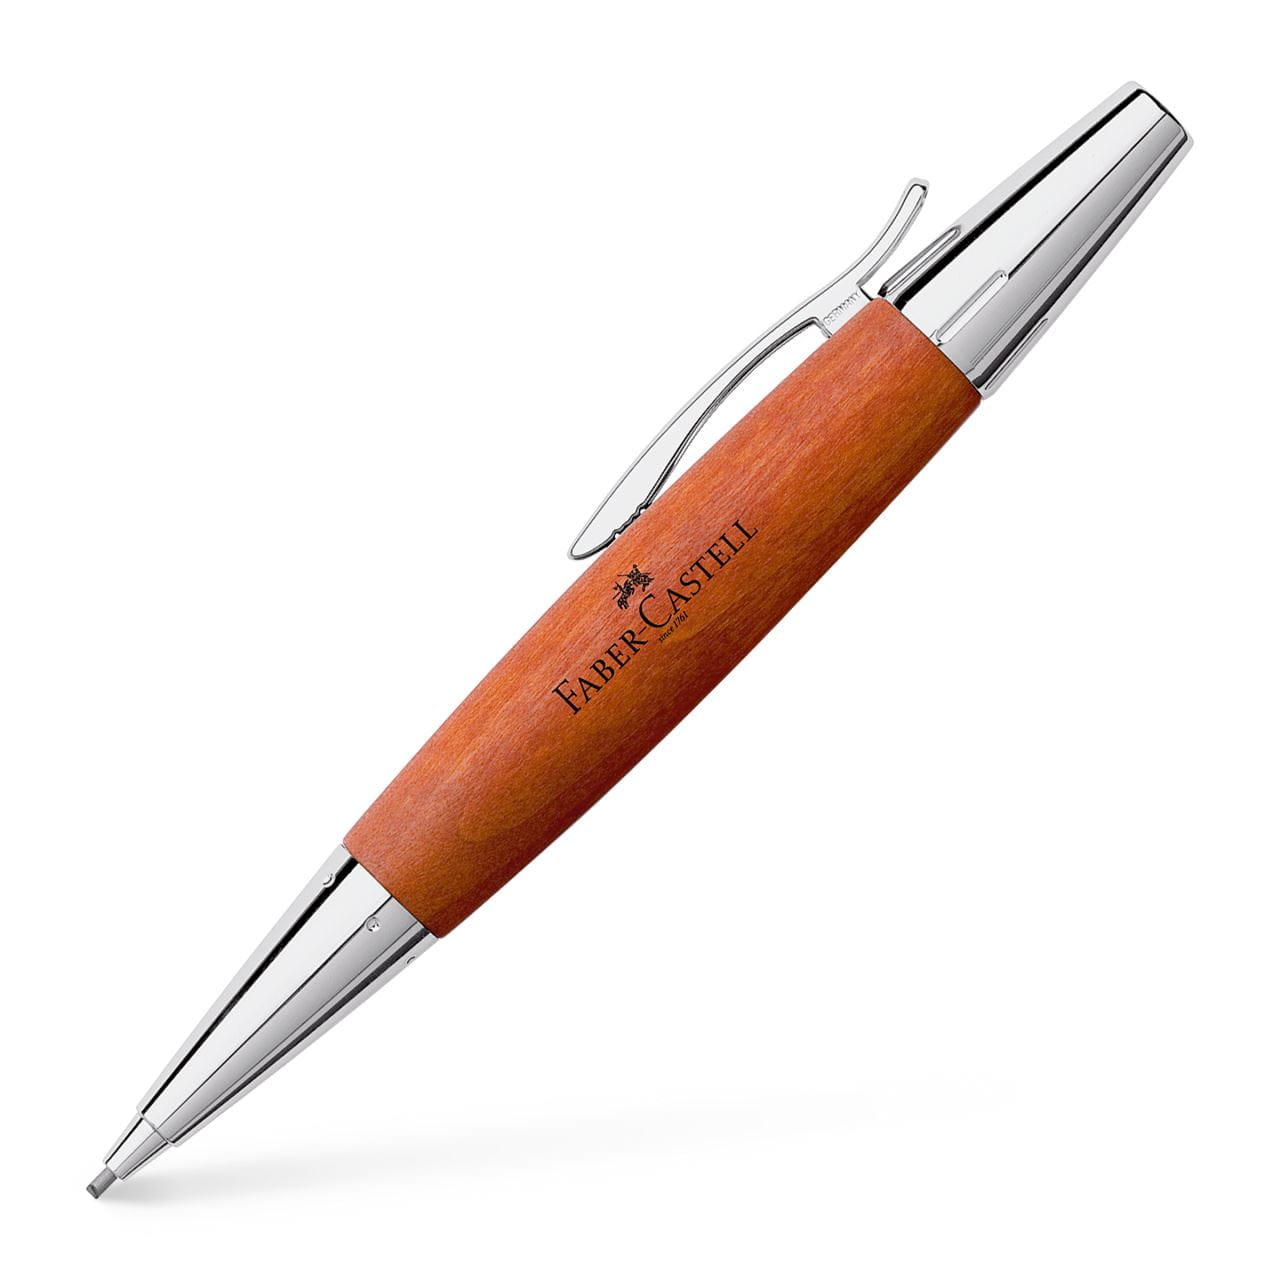 Faber-Castell - 德国辉柏嘉 设计尚品系列 镀铬/木质活动铅笔 褐色